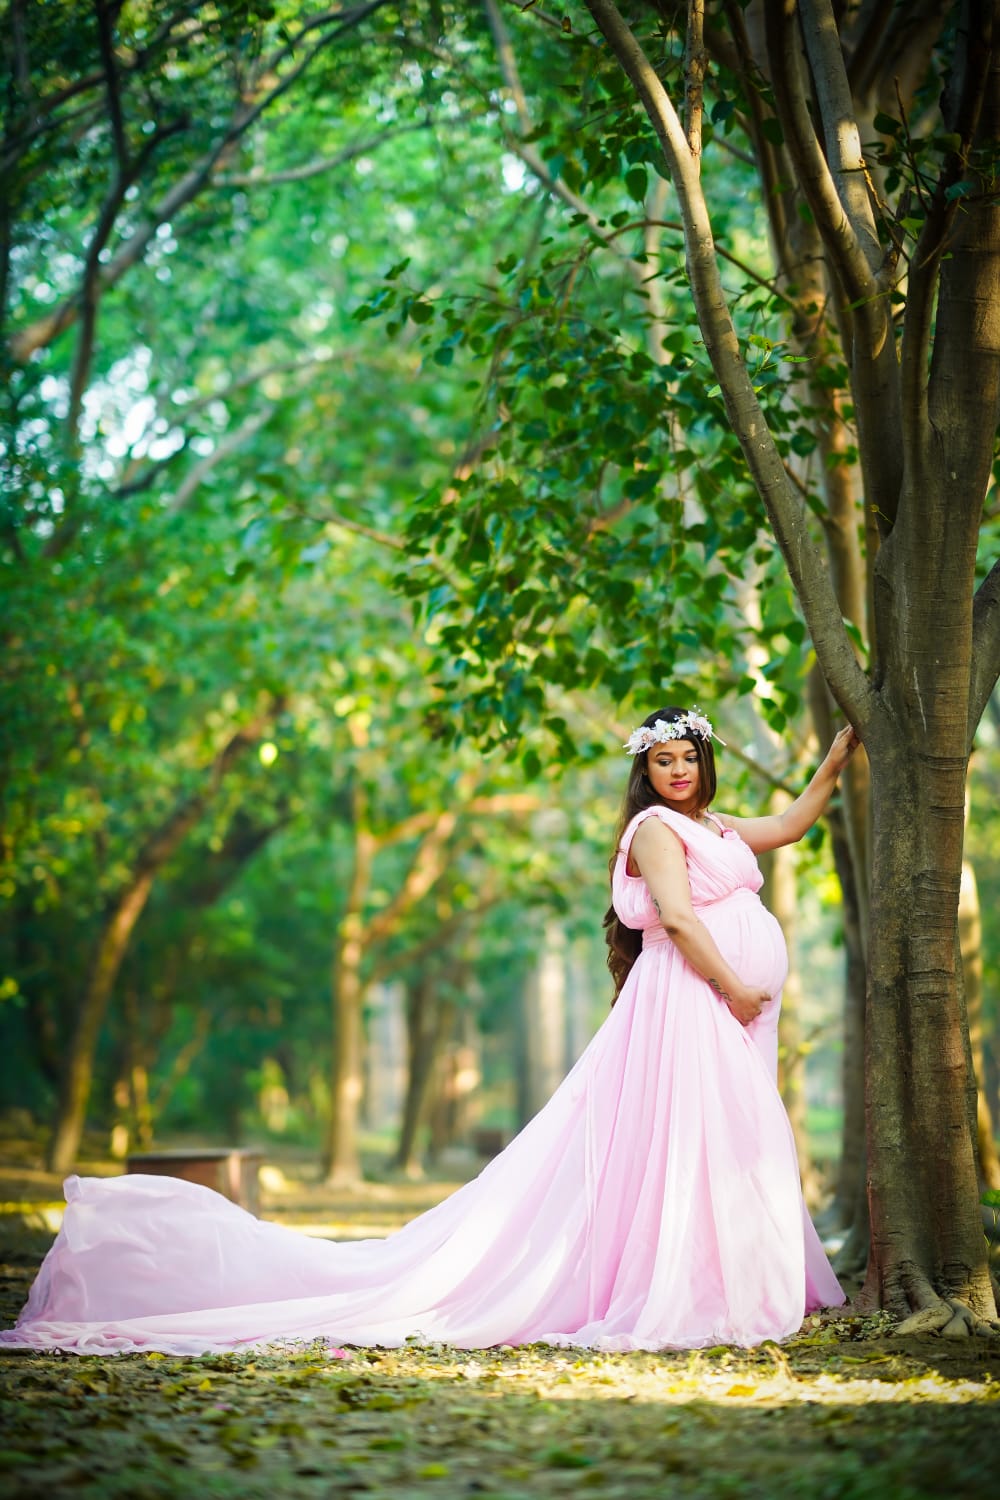 Banaras Photoshoot Dresses on Rent